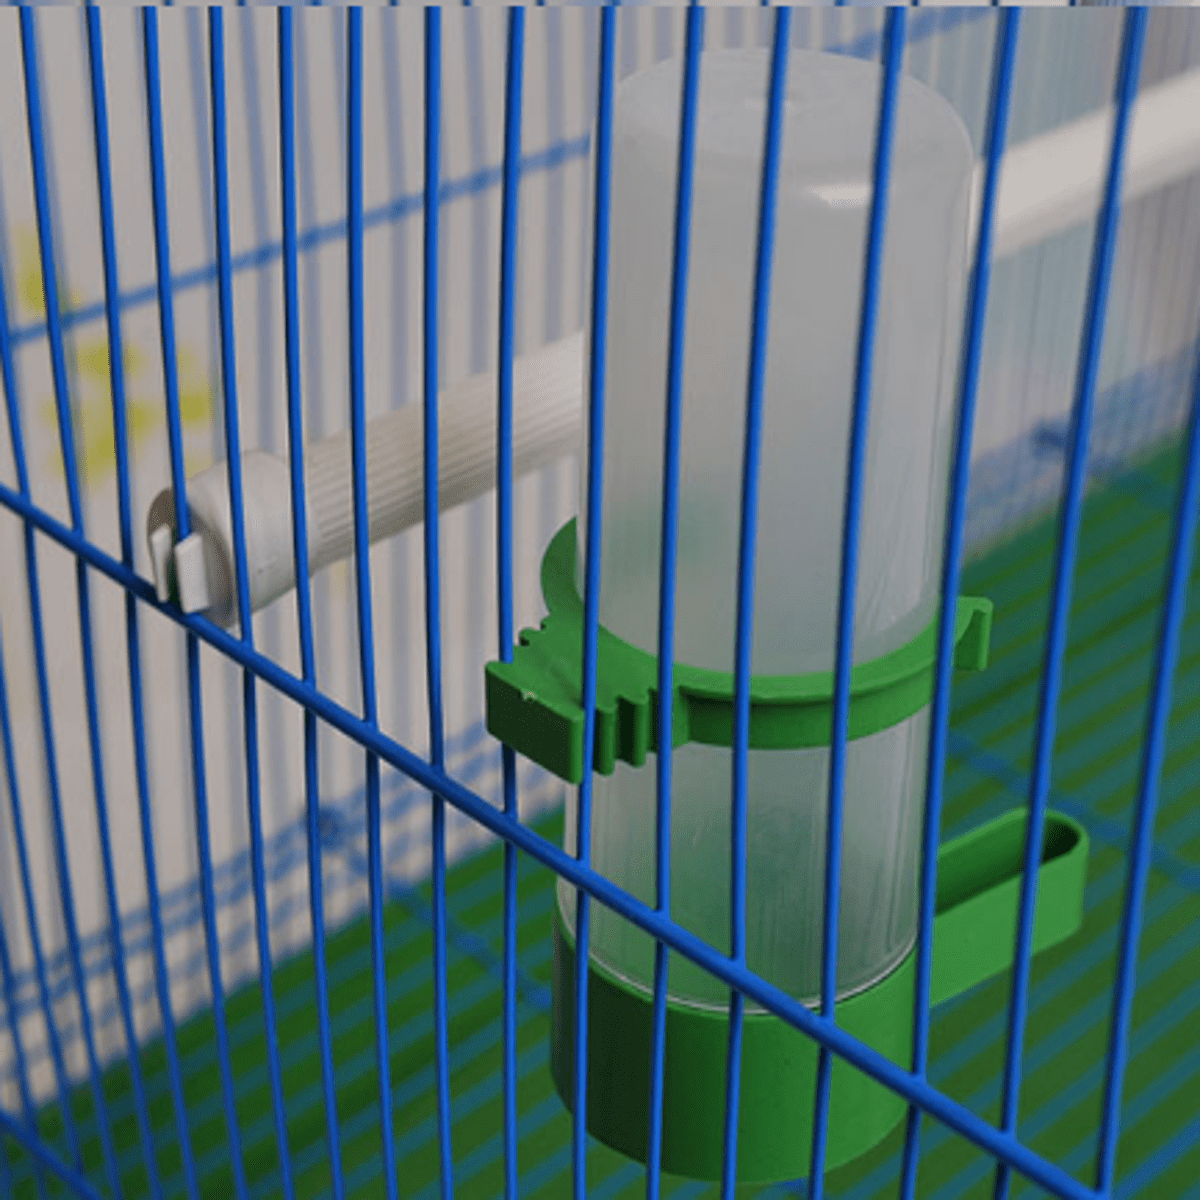 Bird Feeder Water Feeding Automatic Drinker Parrot Pet Dispenser w/Ball Nipple